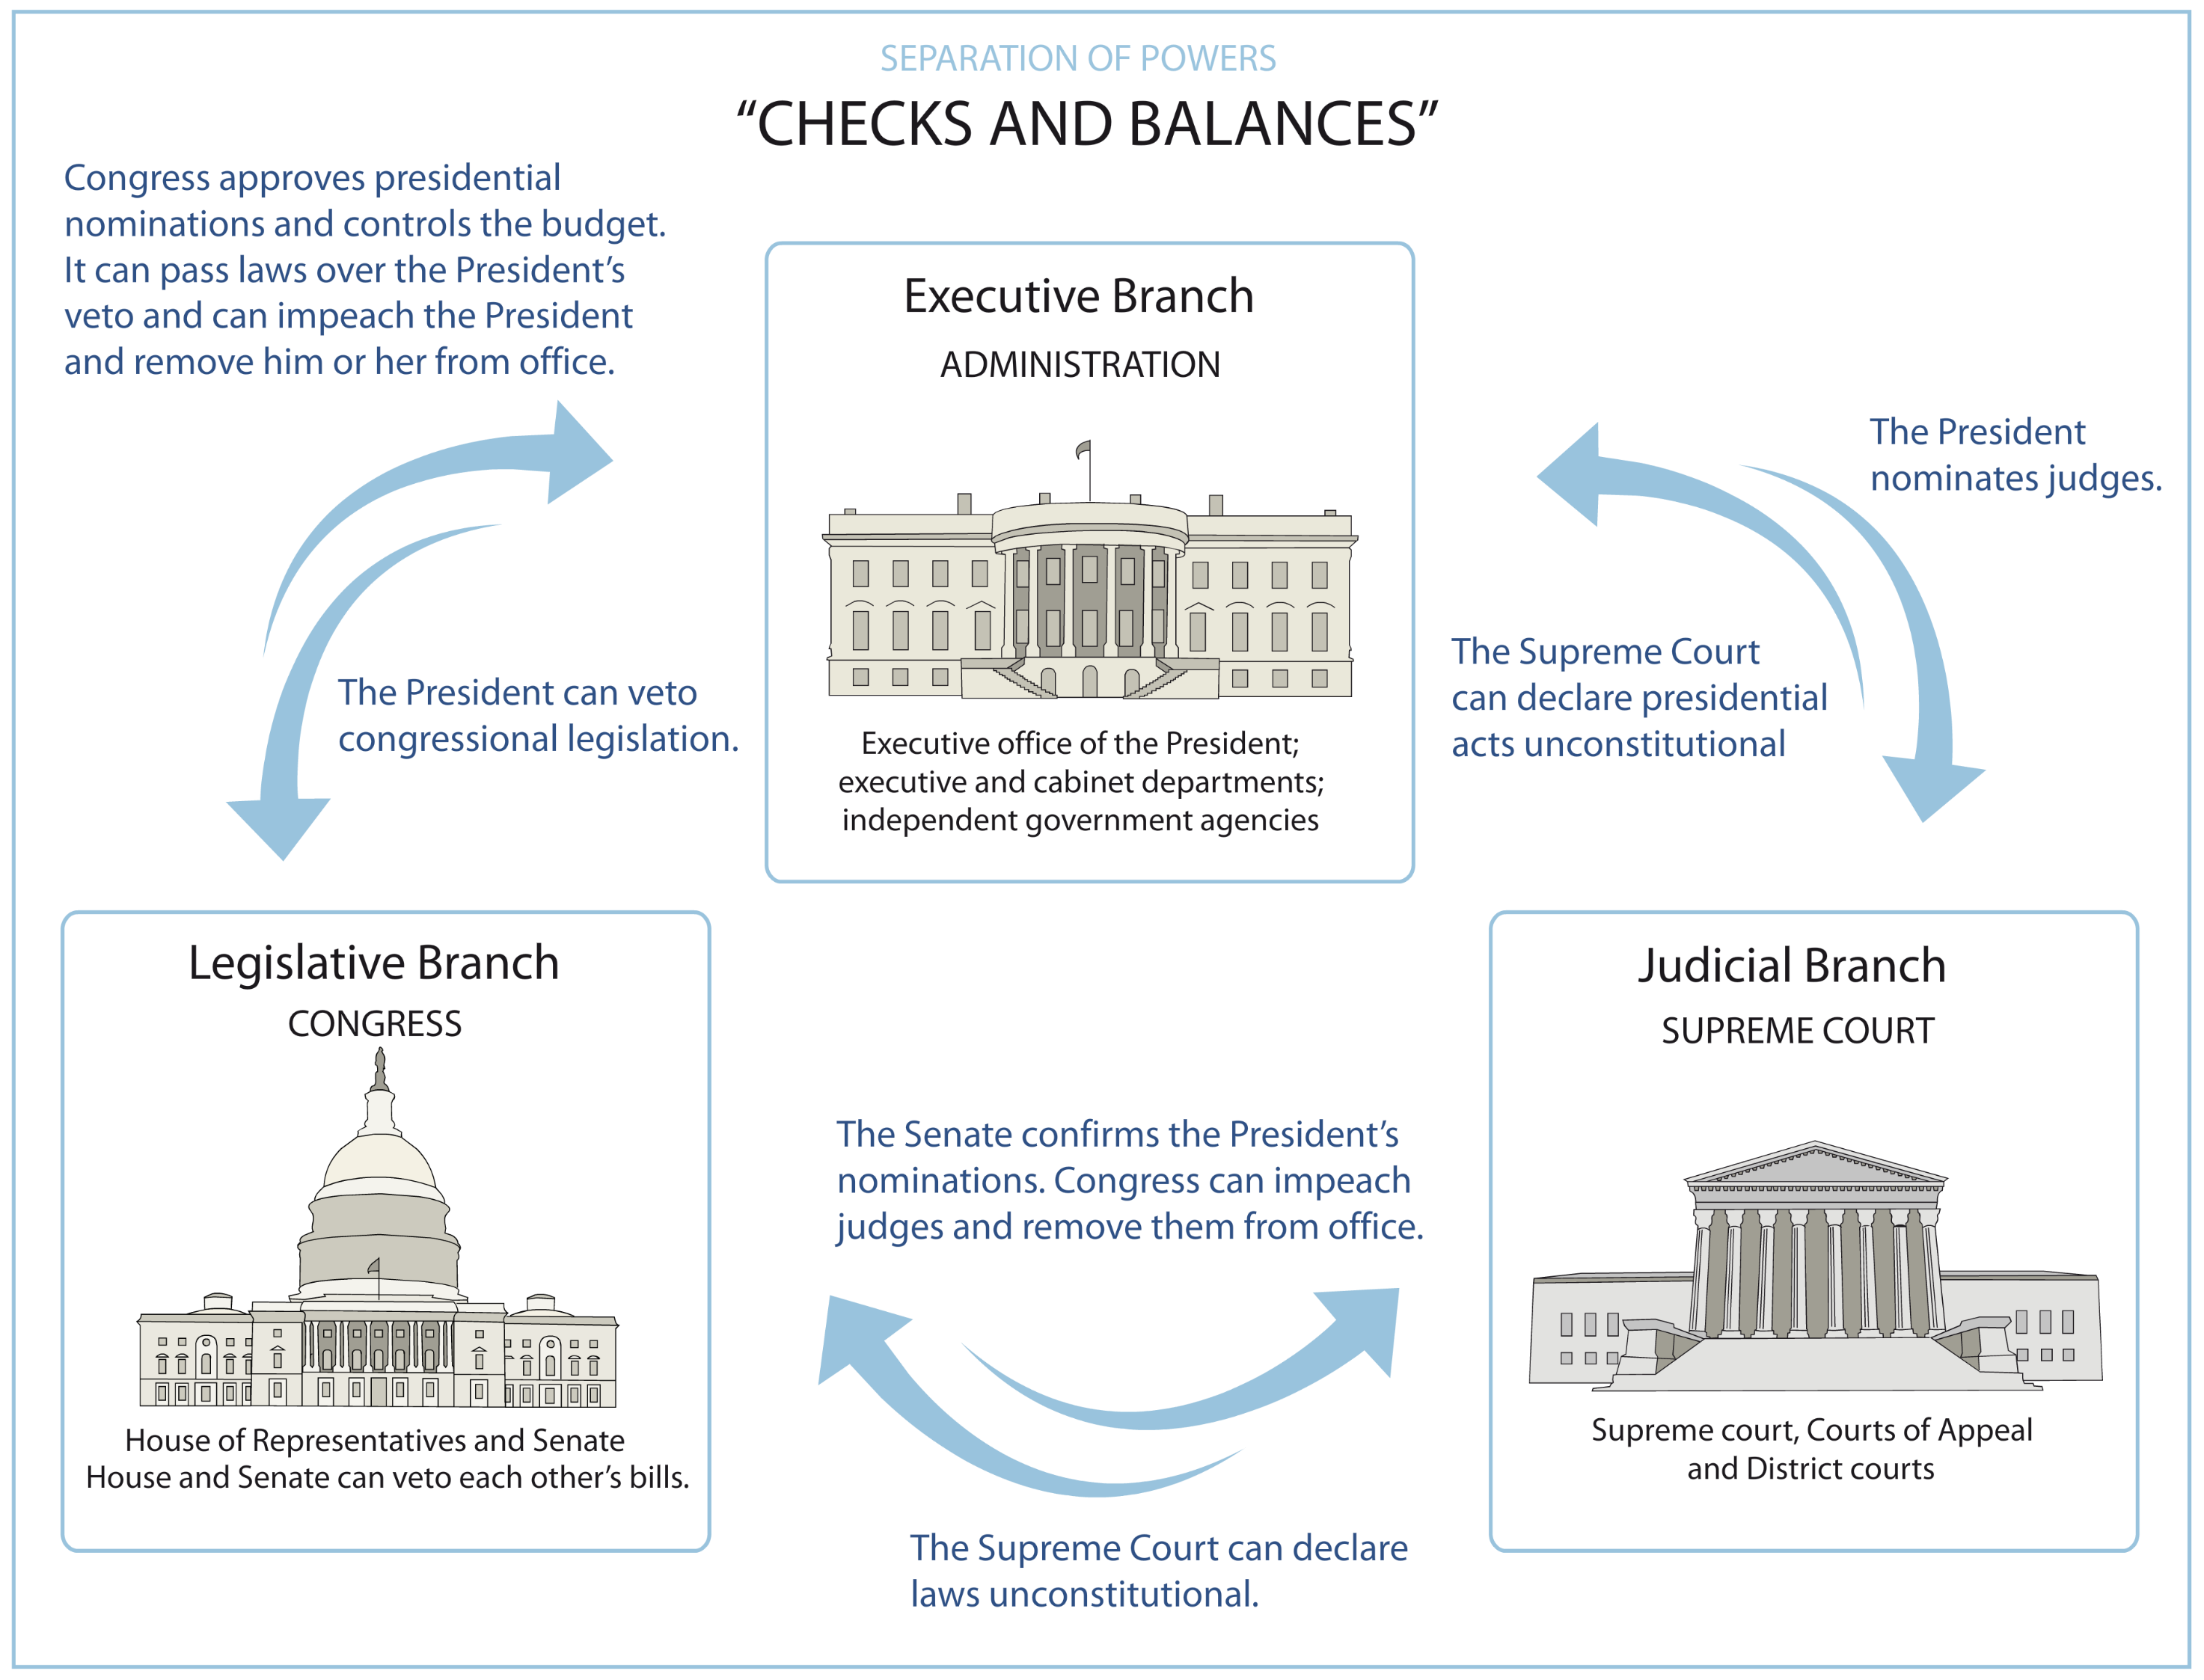 Checks And Balances Worksheet Answer Key